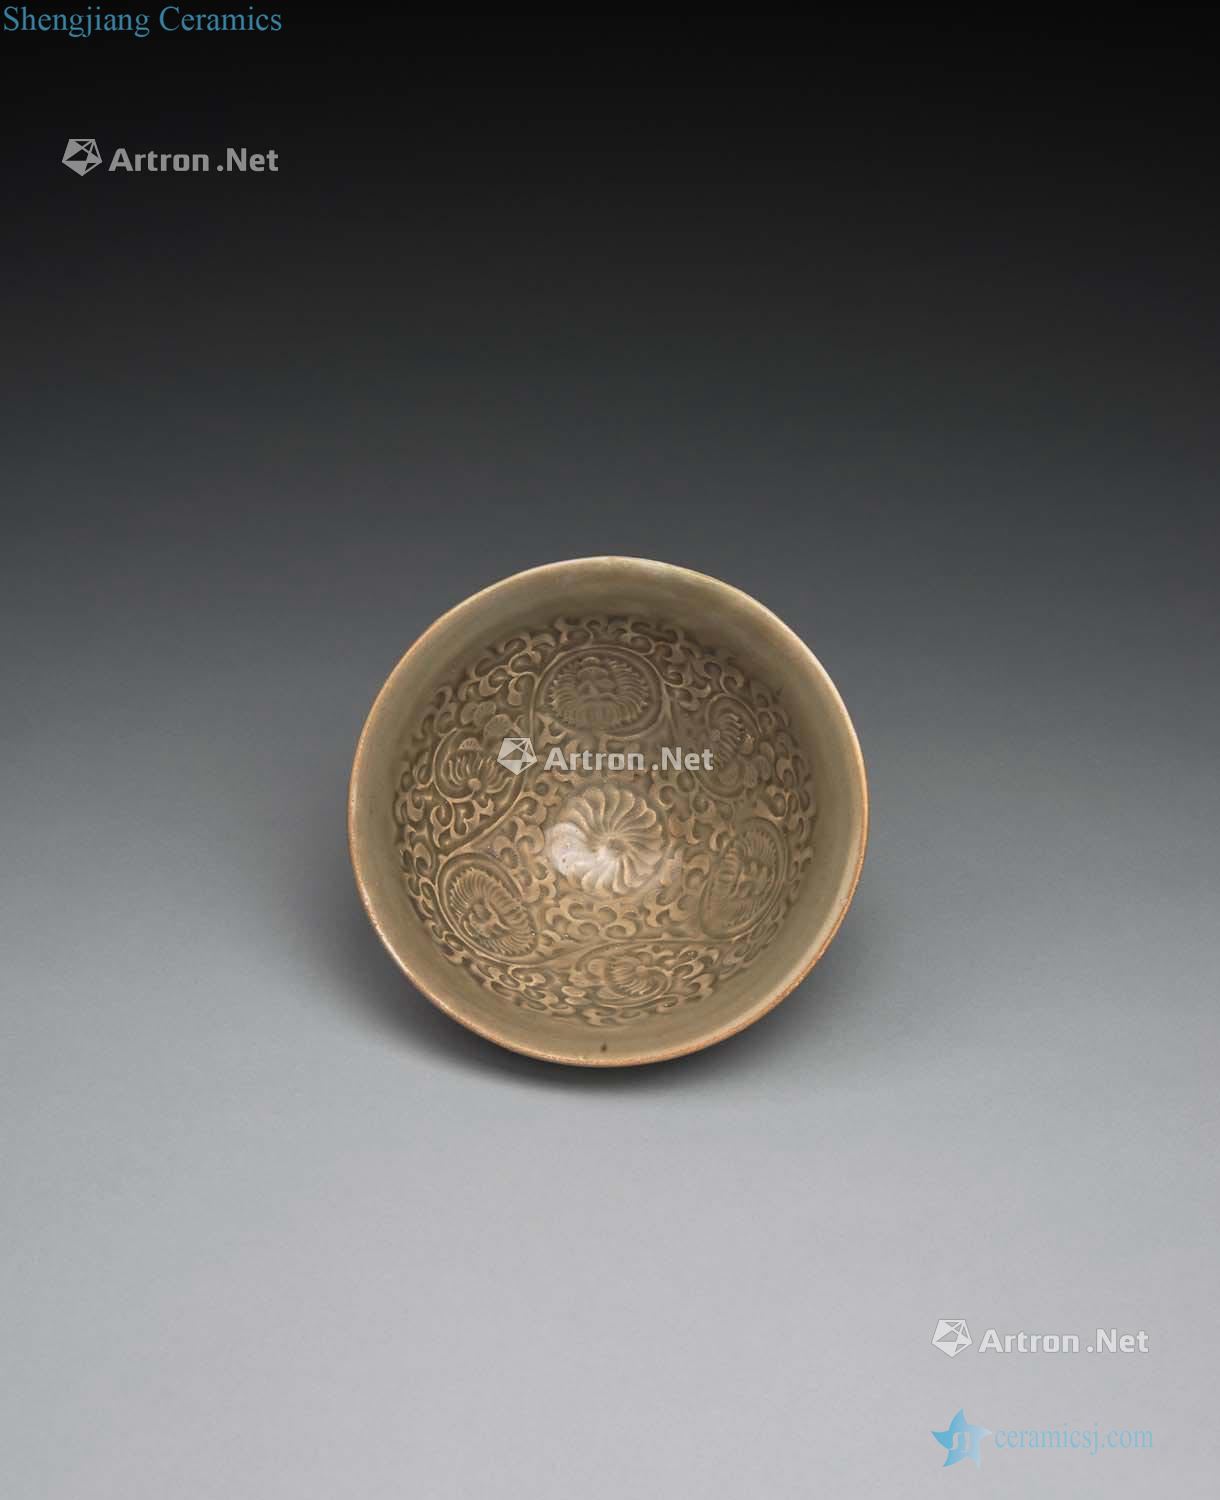 The song dynasty Yao state kiln green glaze hand-cut bowl